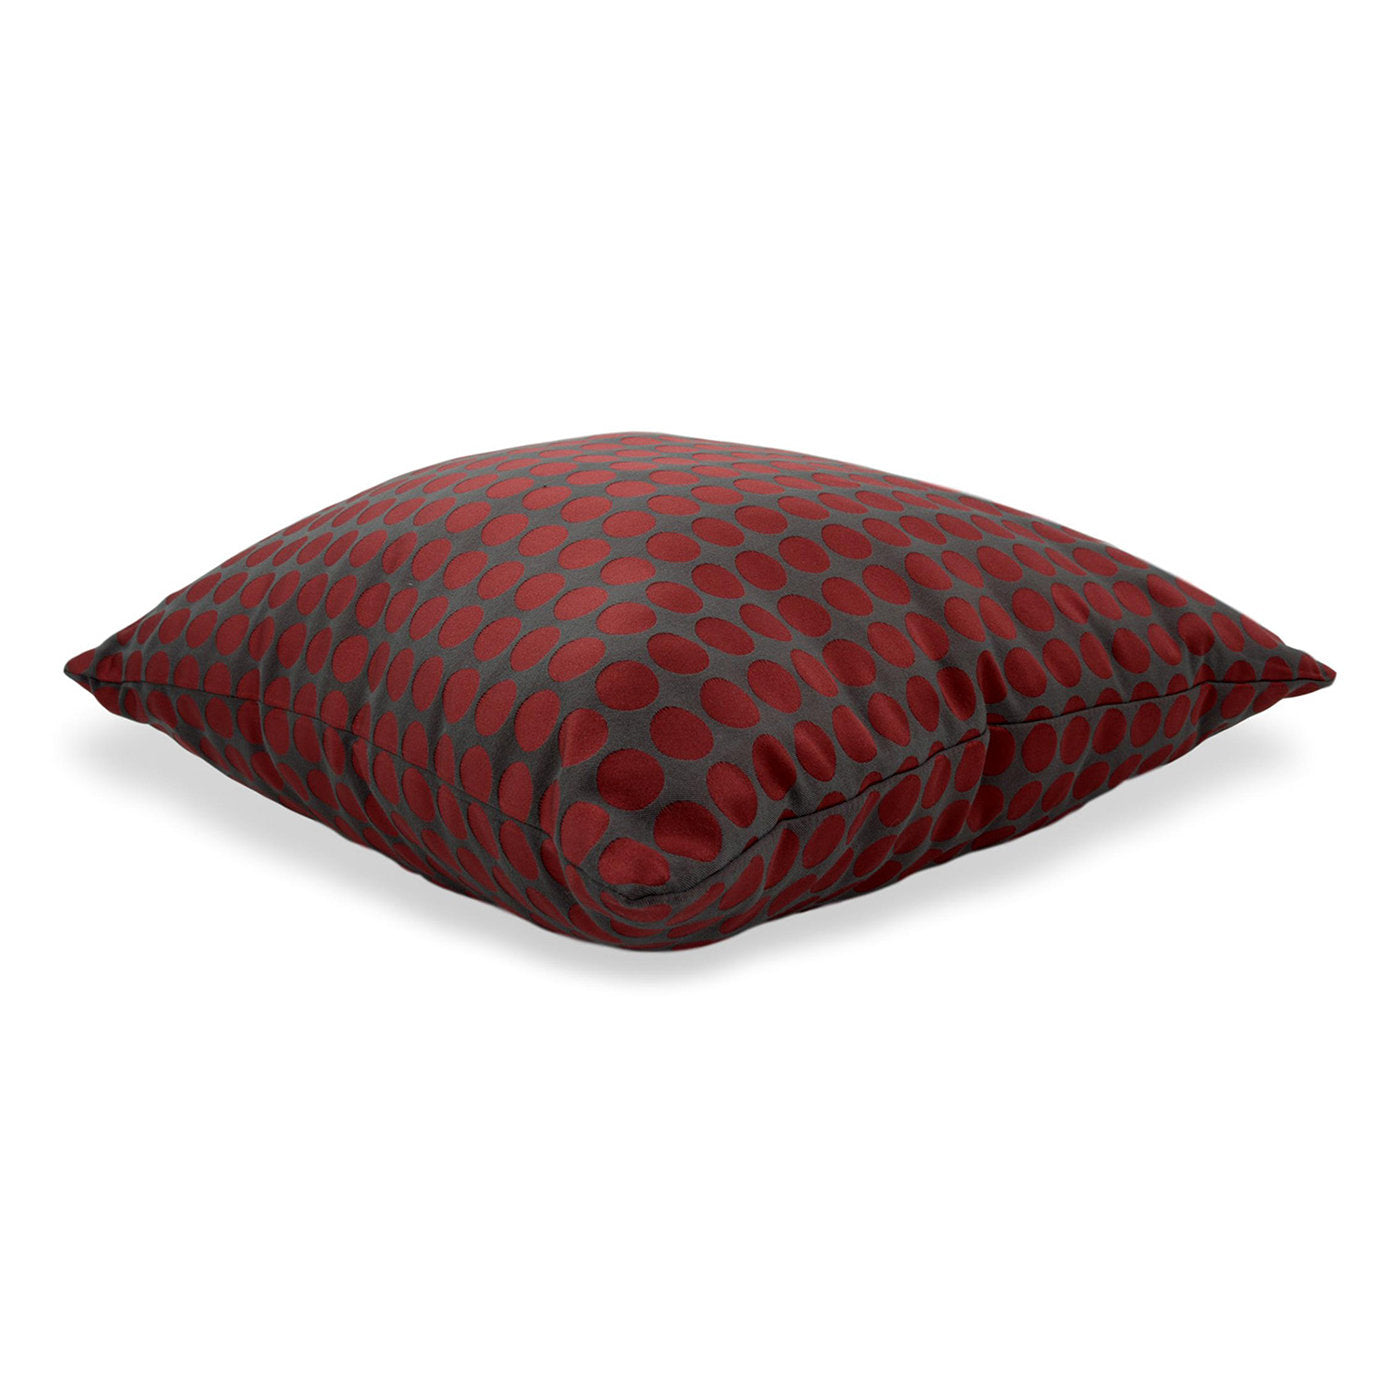 Dark Red Carrè Cushion in polka dots jacquard fabric - Alternative view 1